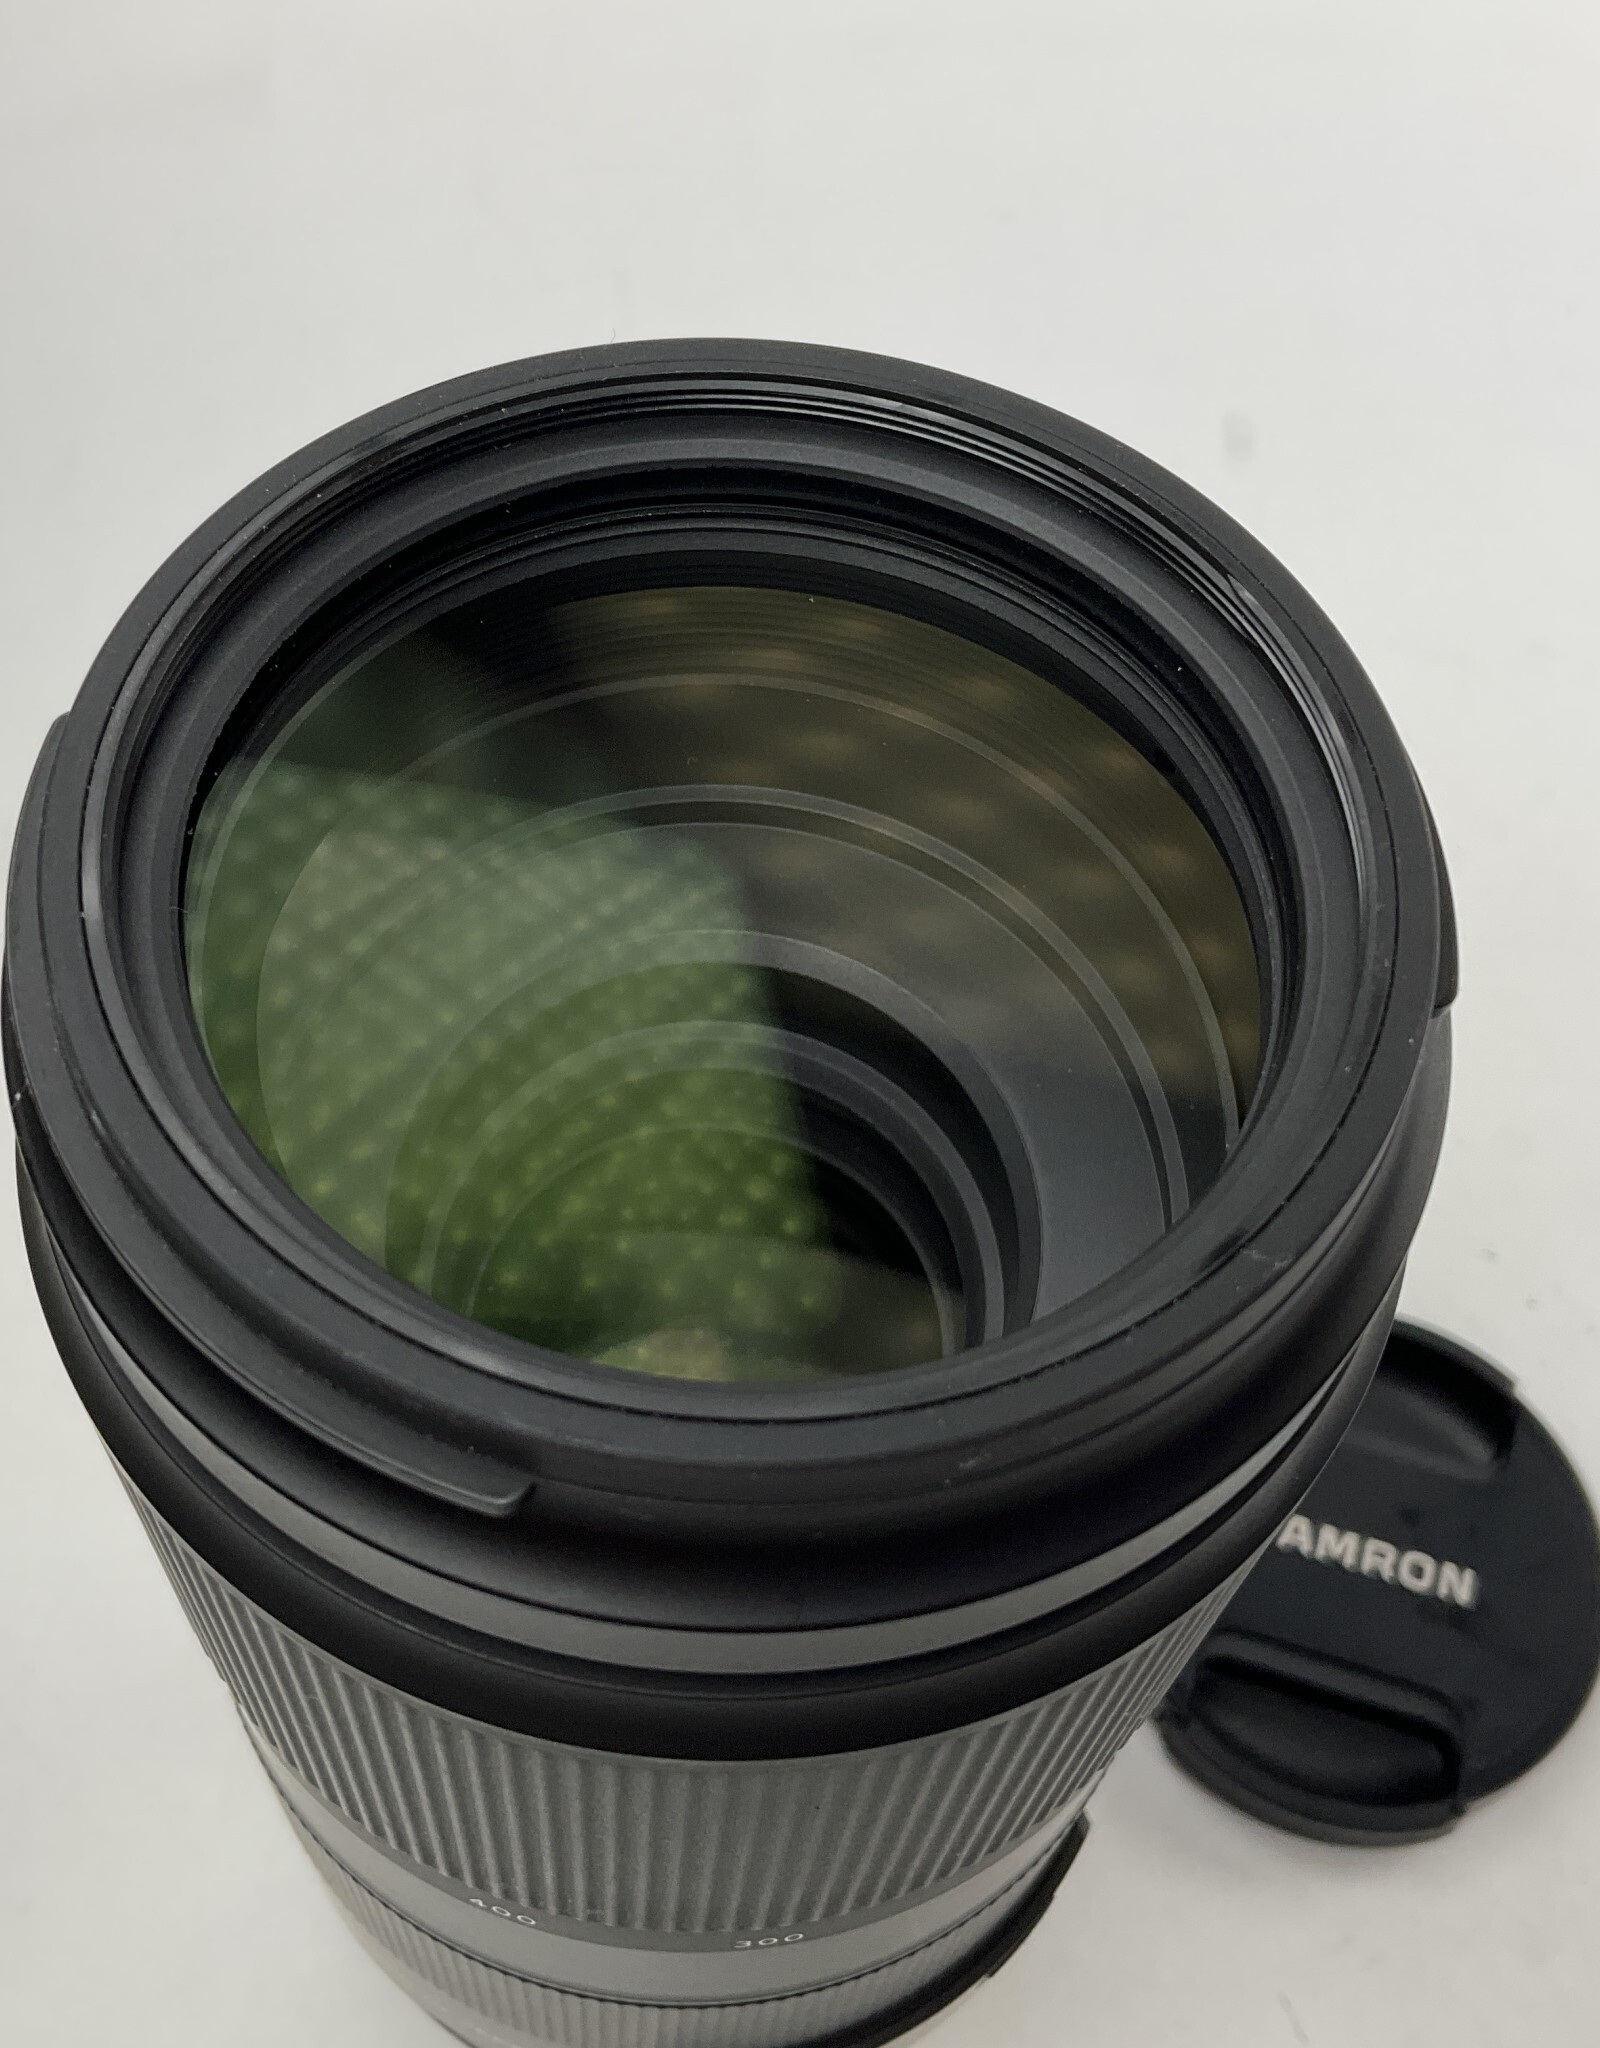 Tamron 100-400mm f4.5-6.3 Di VC USD Lens for Nikon Used Good - Biggs Camera